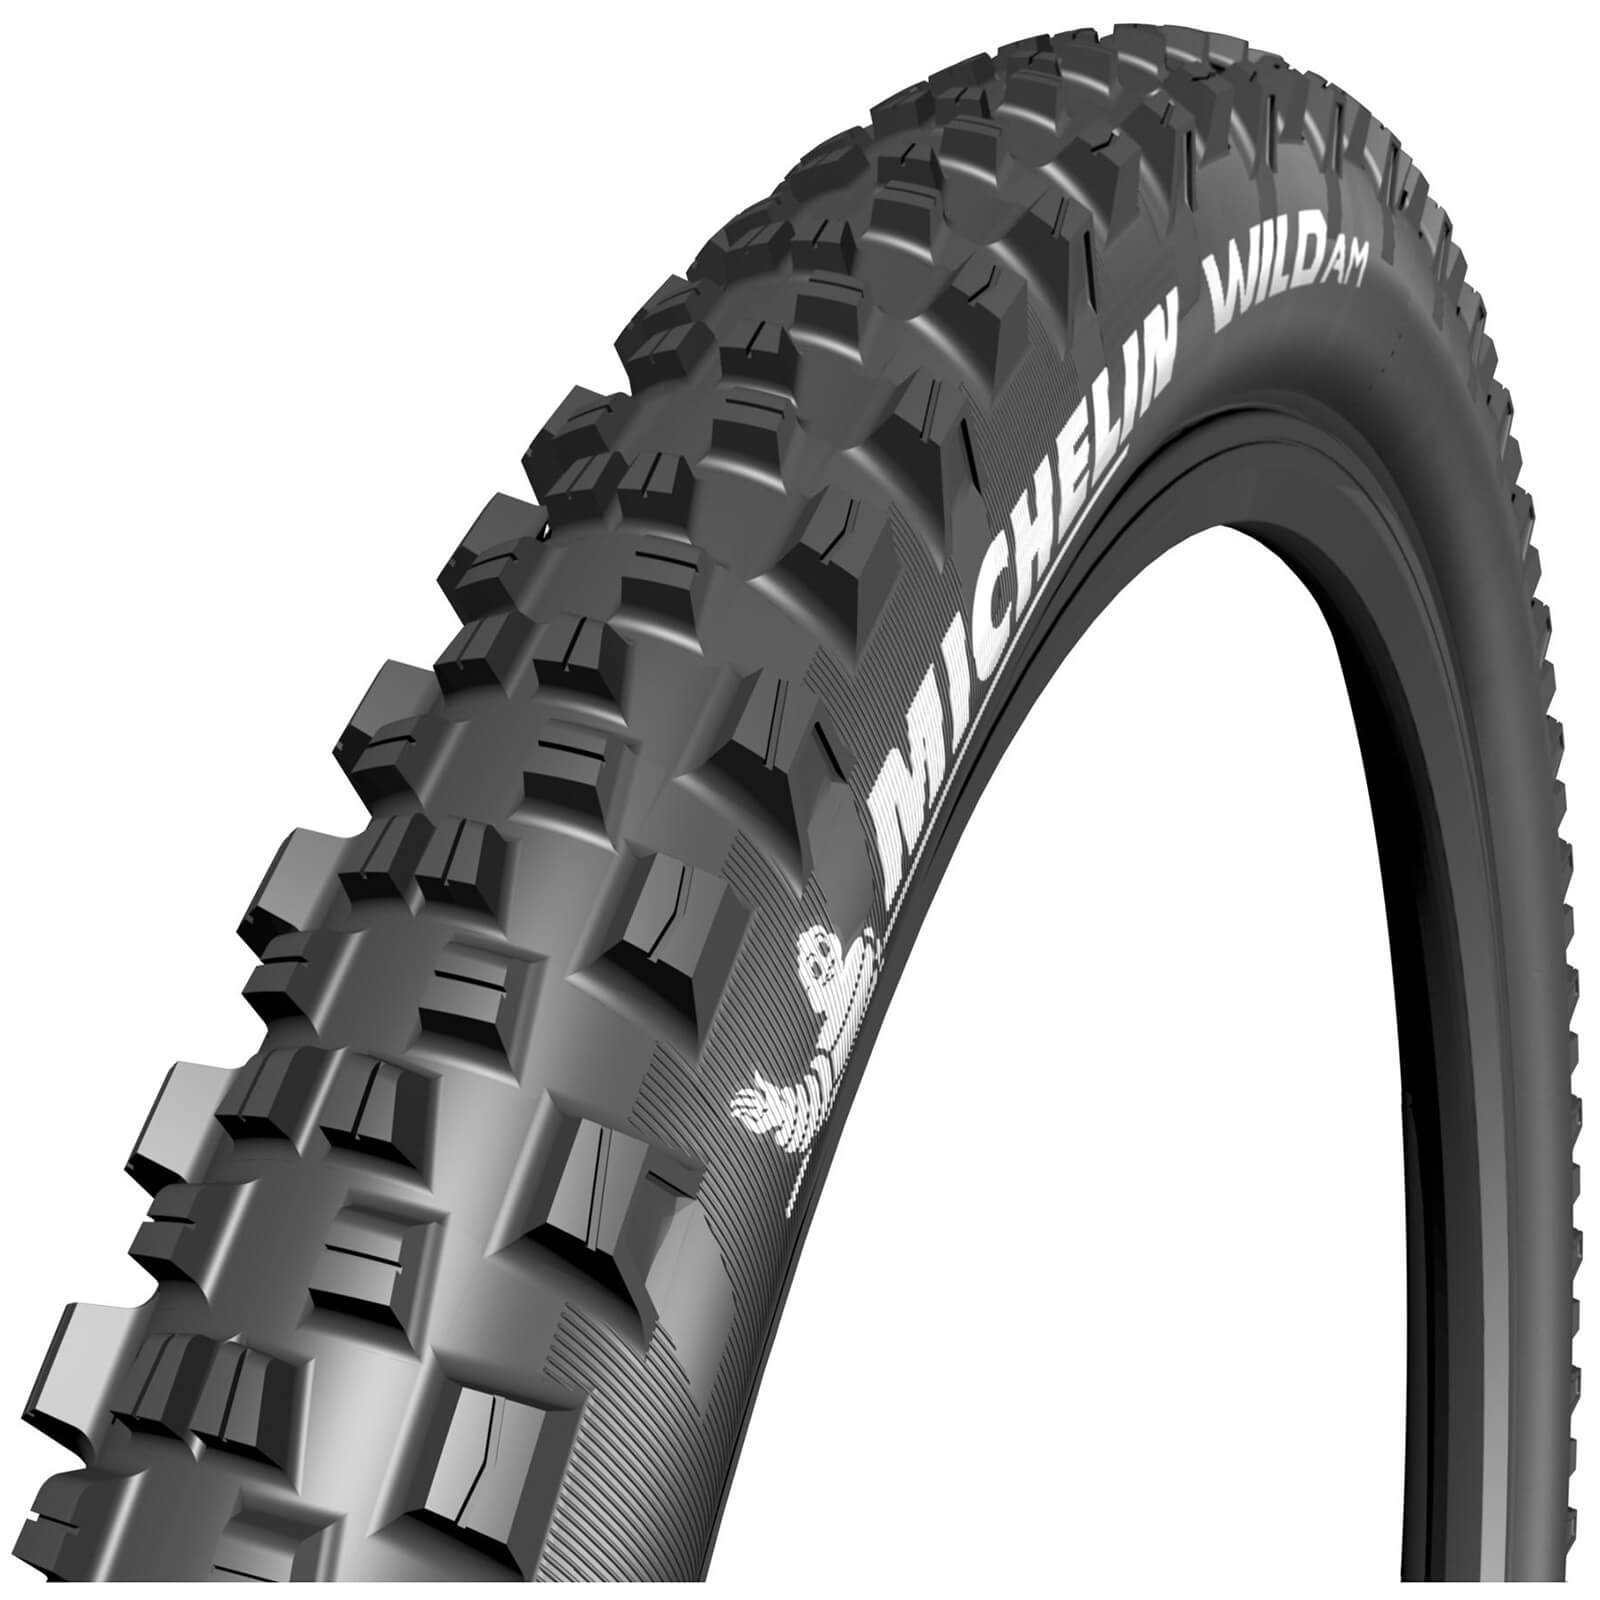 Michelin Wild AM Performance Line MTB Tyre - 27.5x2.60